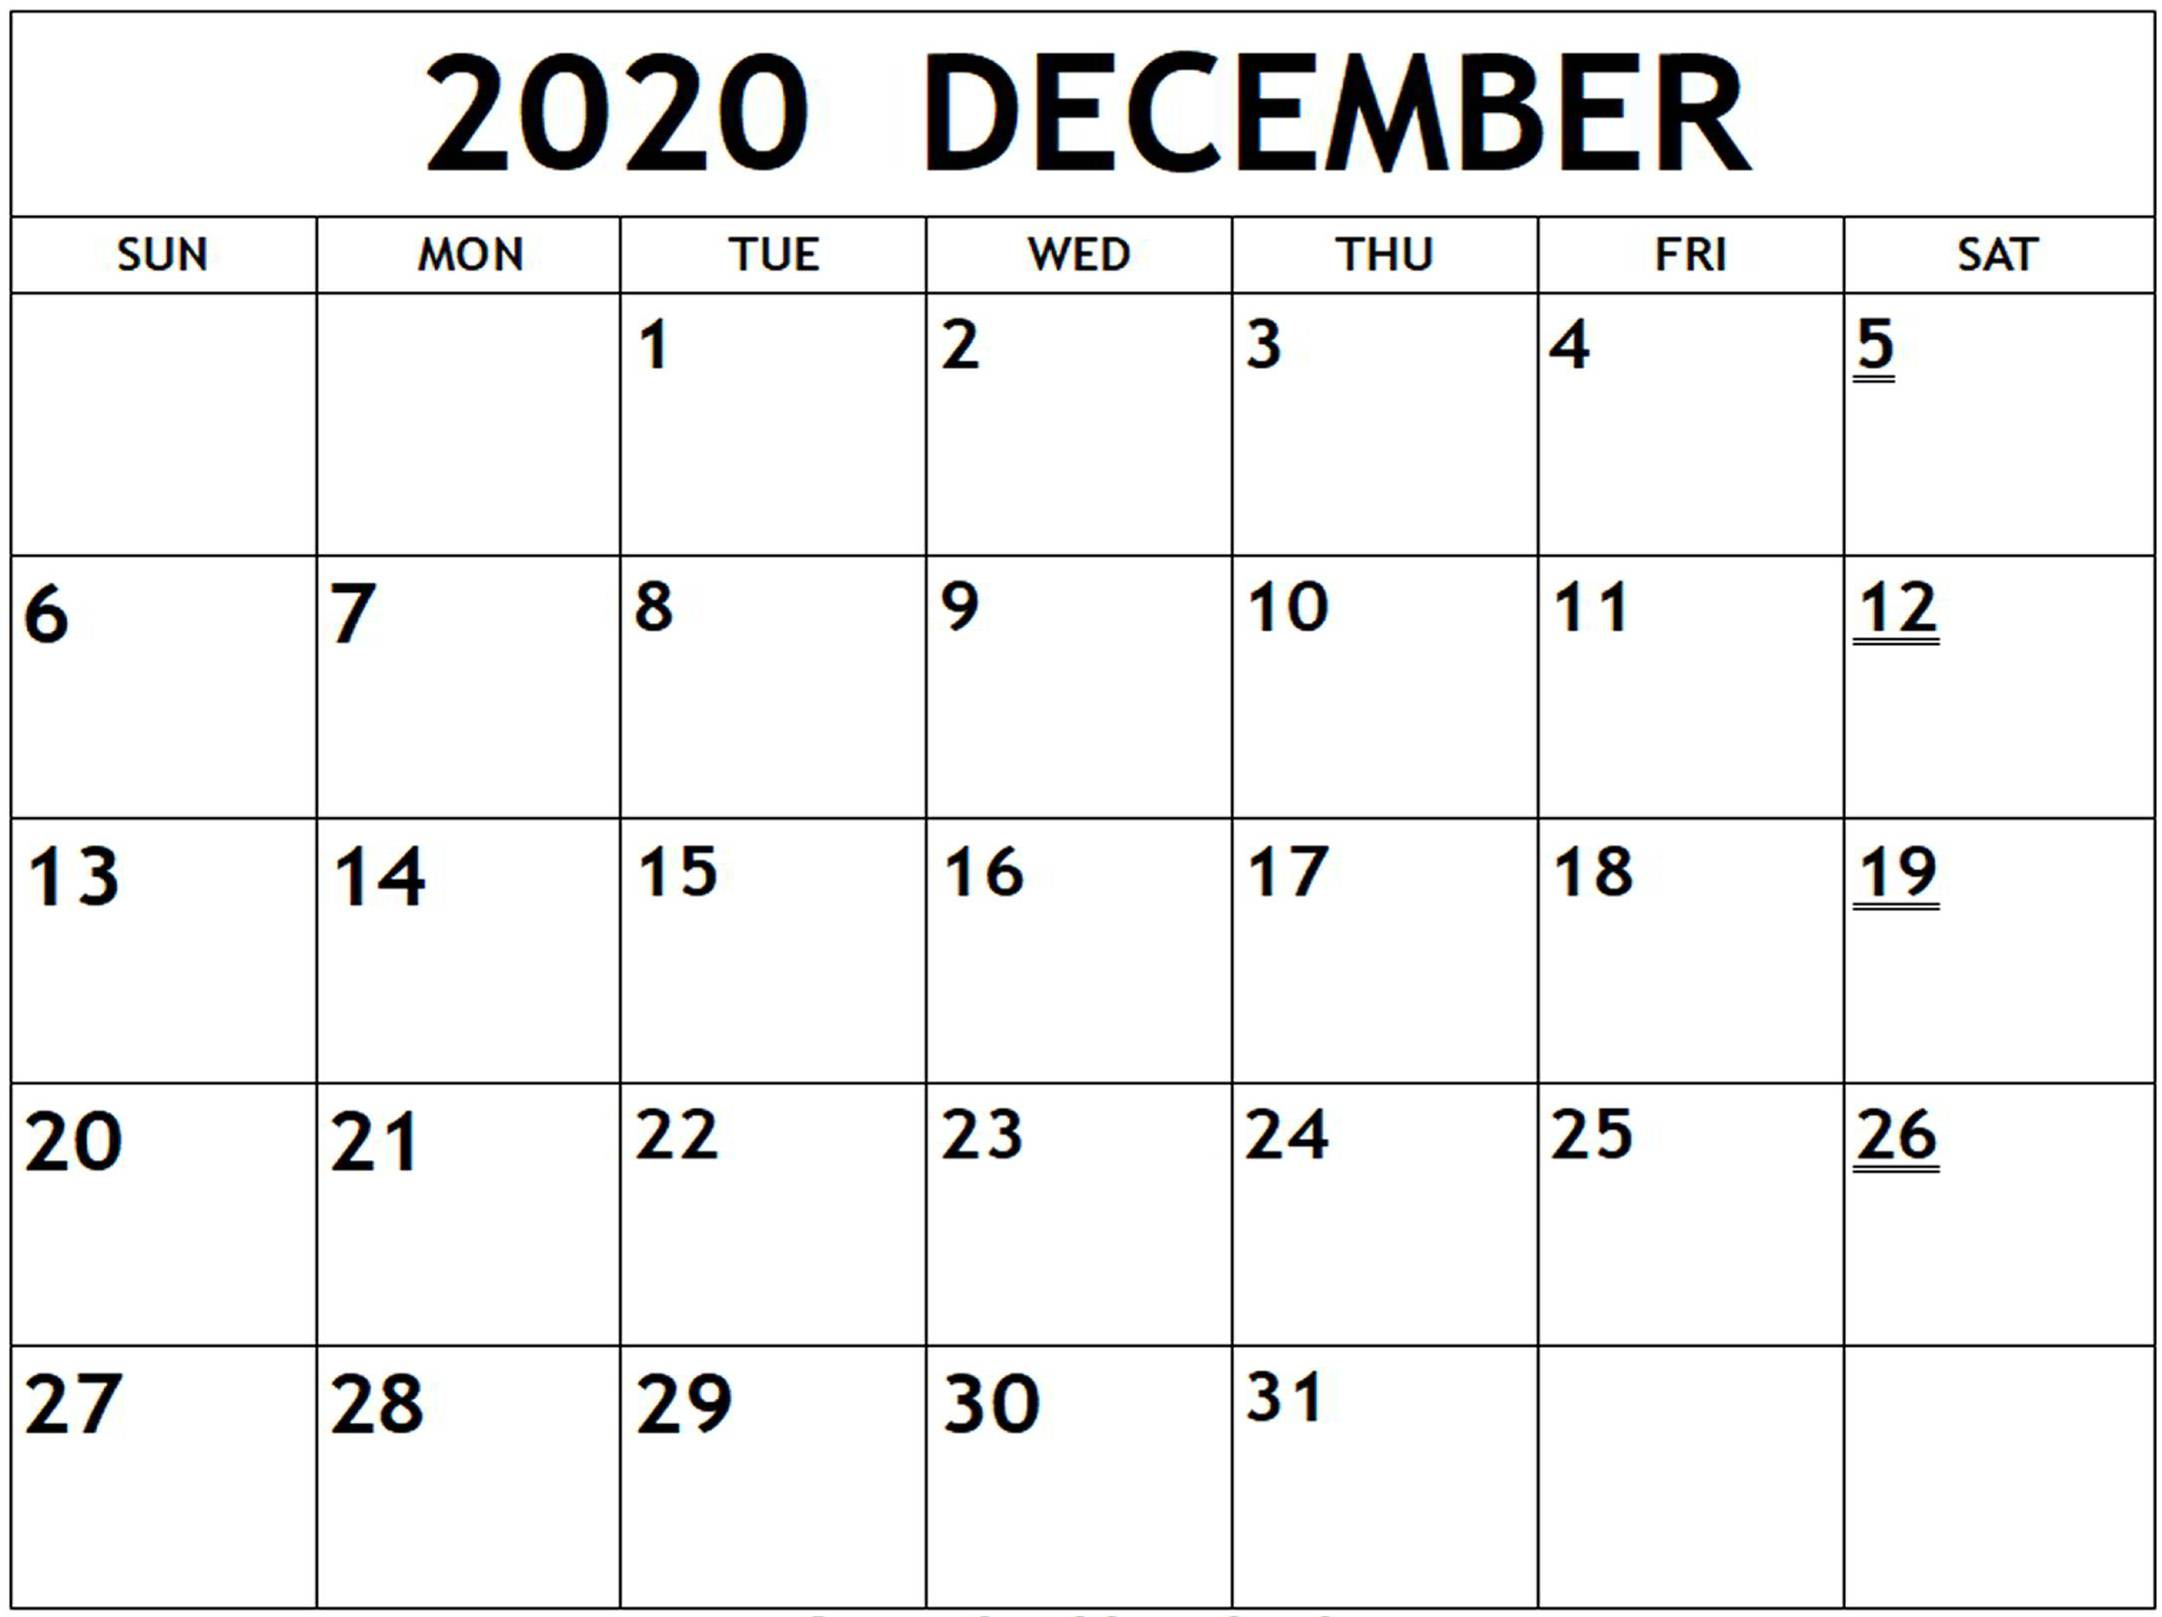 December 2020 Printable Calendar With Holidays - 2019 Calendars For Students Education December December 2020 To Feb 2021 Calendar